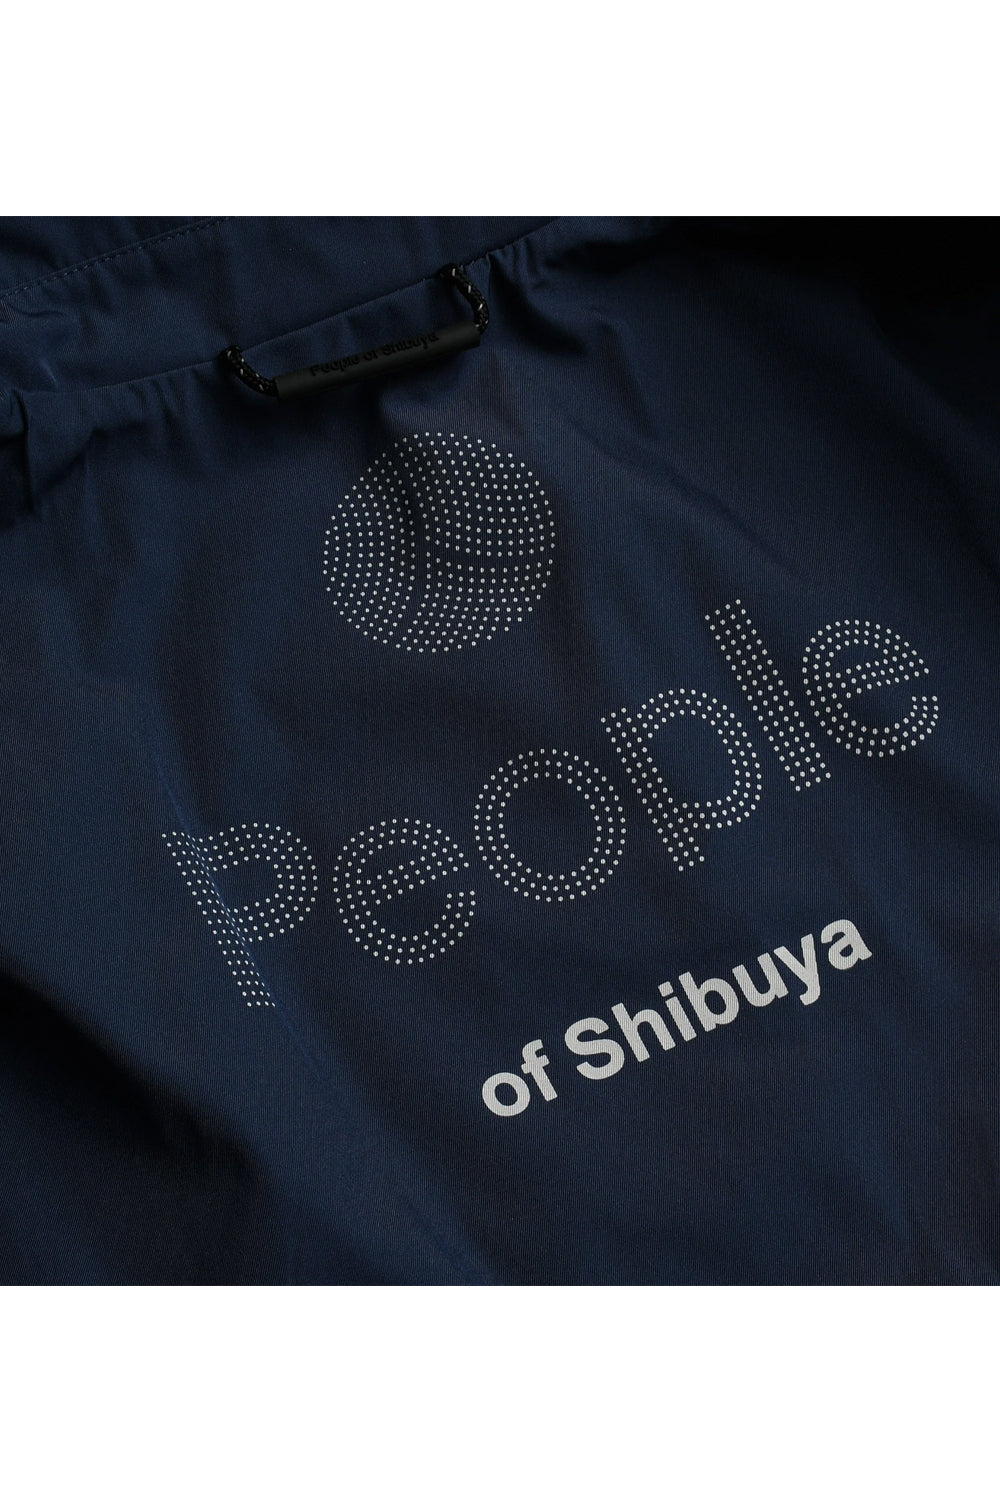 PEOPLE OF SHIBUYA Trench Konuma in tecnico